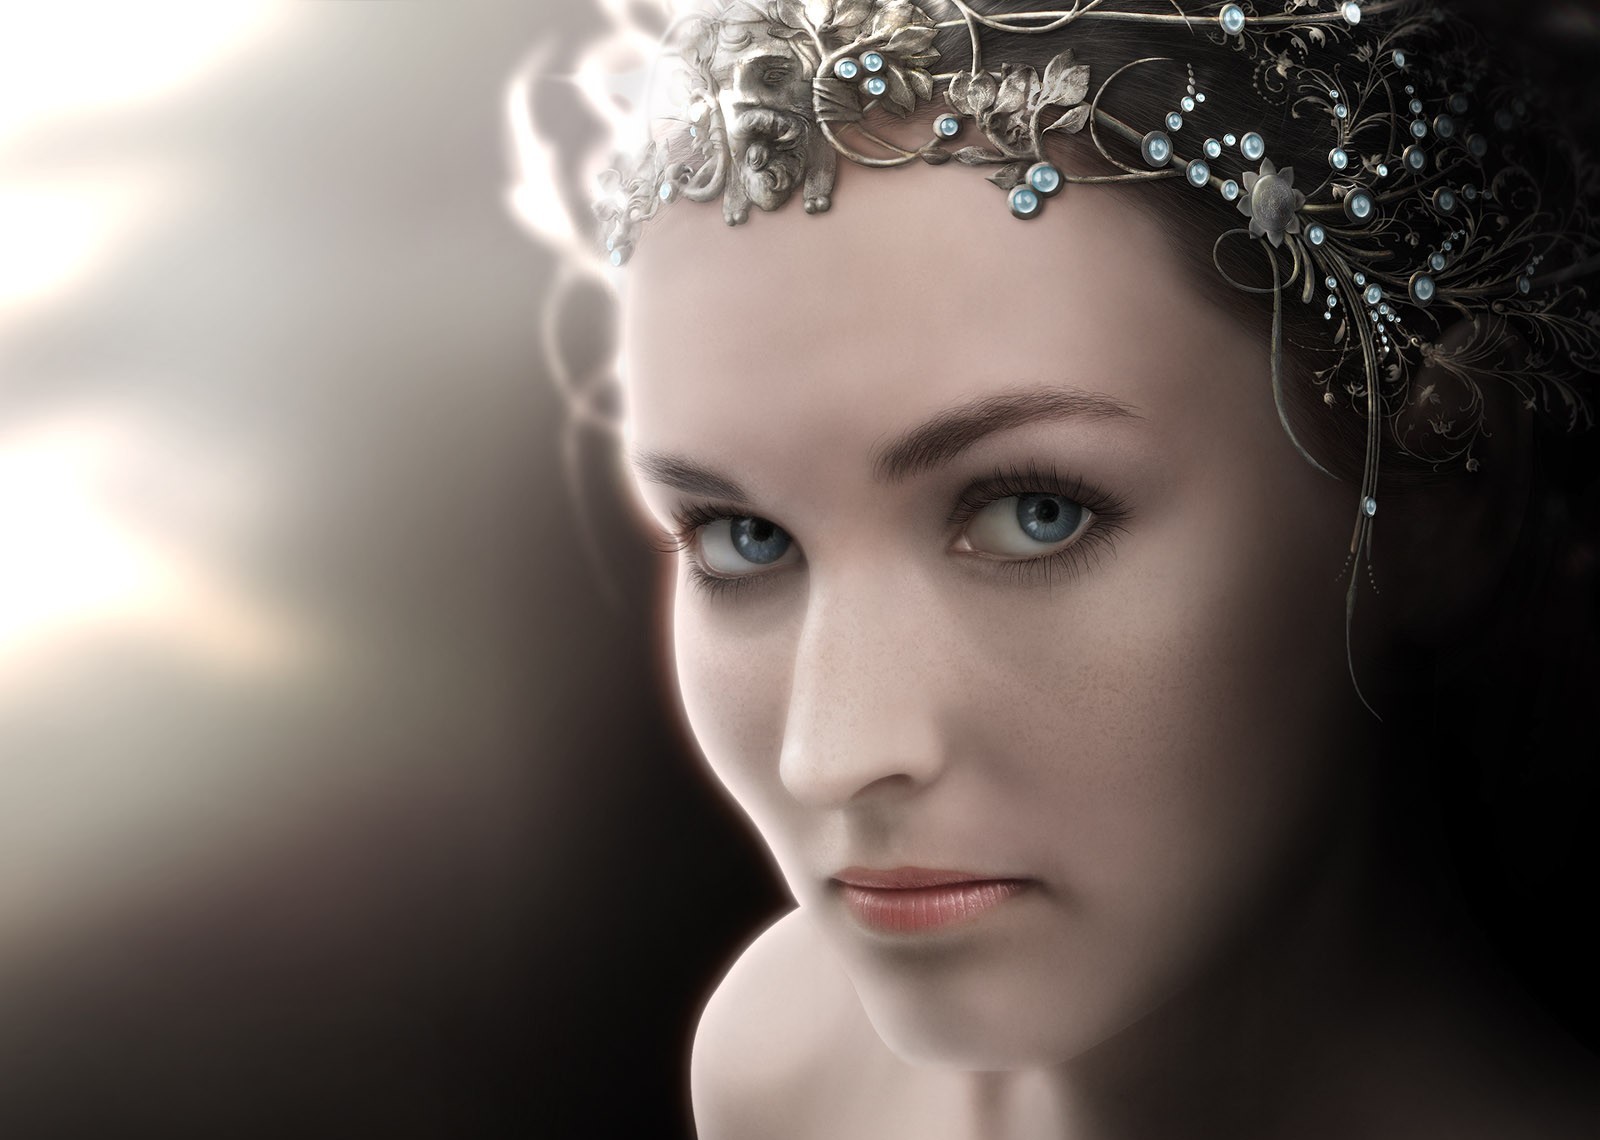 General 1600x1140 CGI fantasy art face crown digital art women looking at viewer